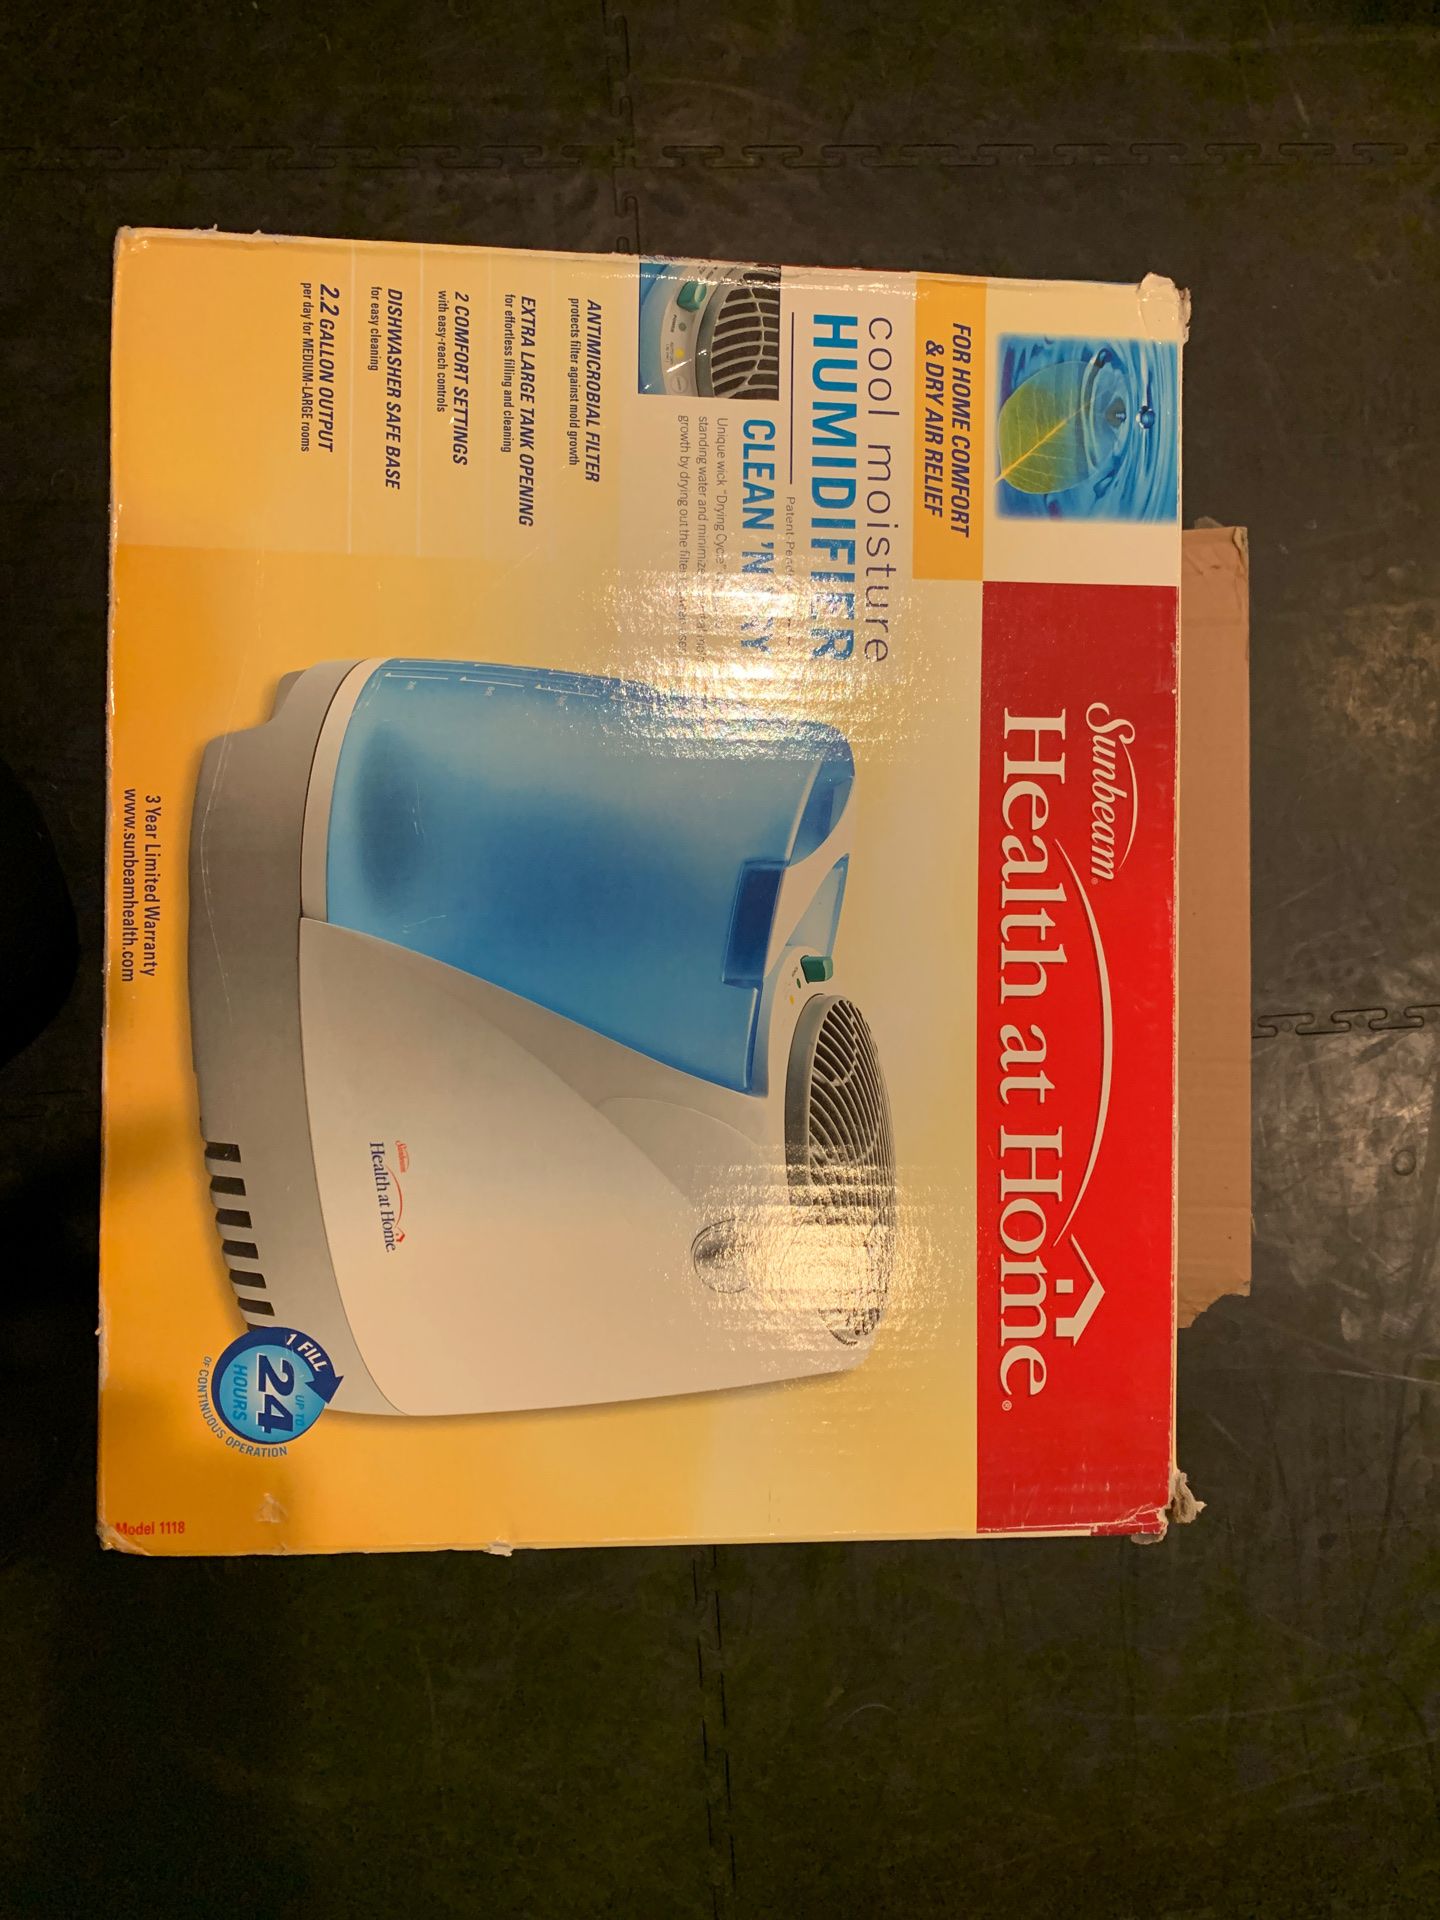 Sunbeam Humidifier in box